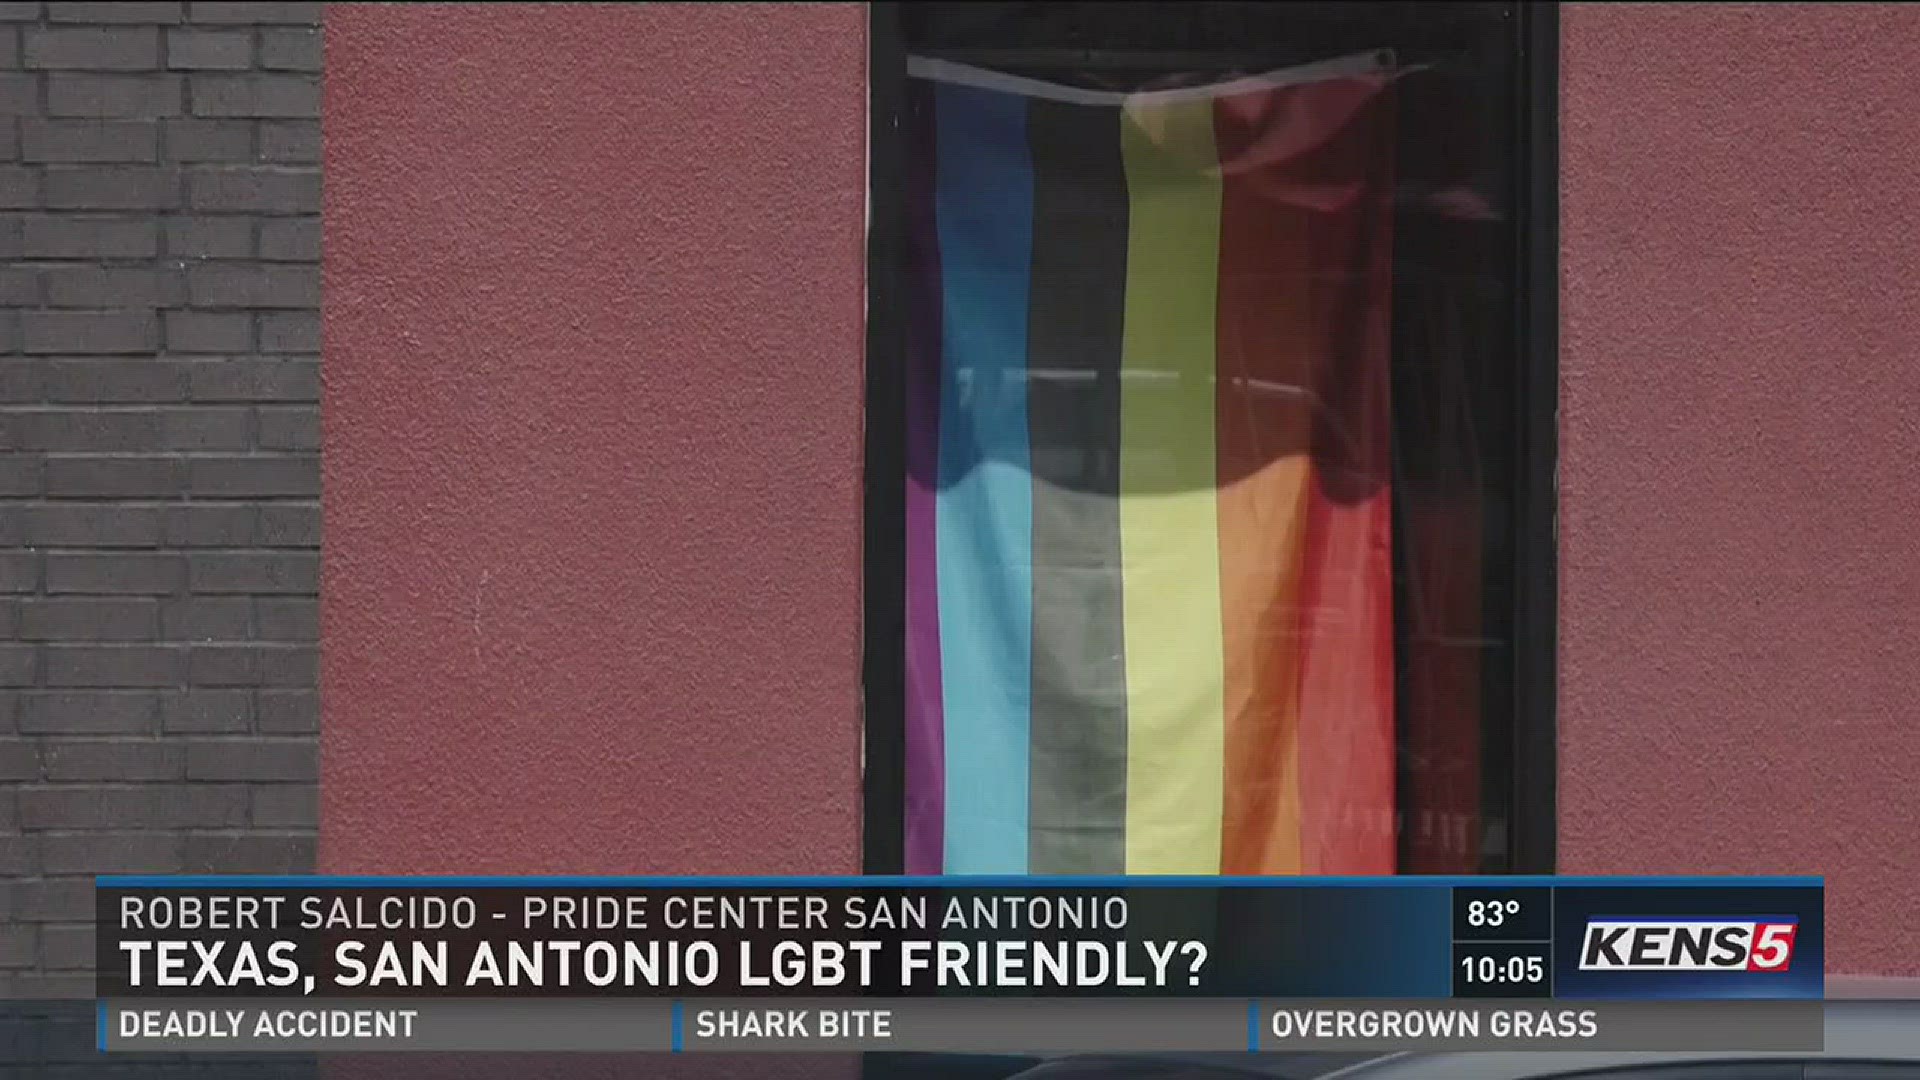 Are Texas and San Antonio LGBT friendly?